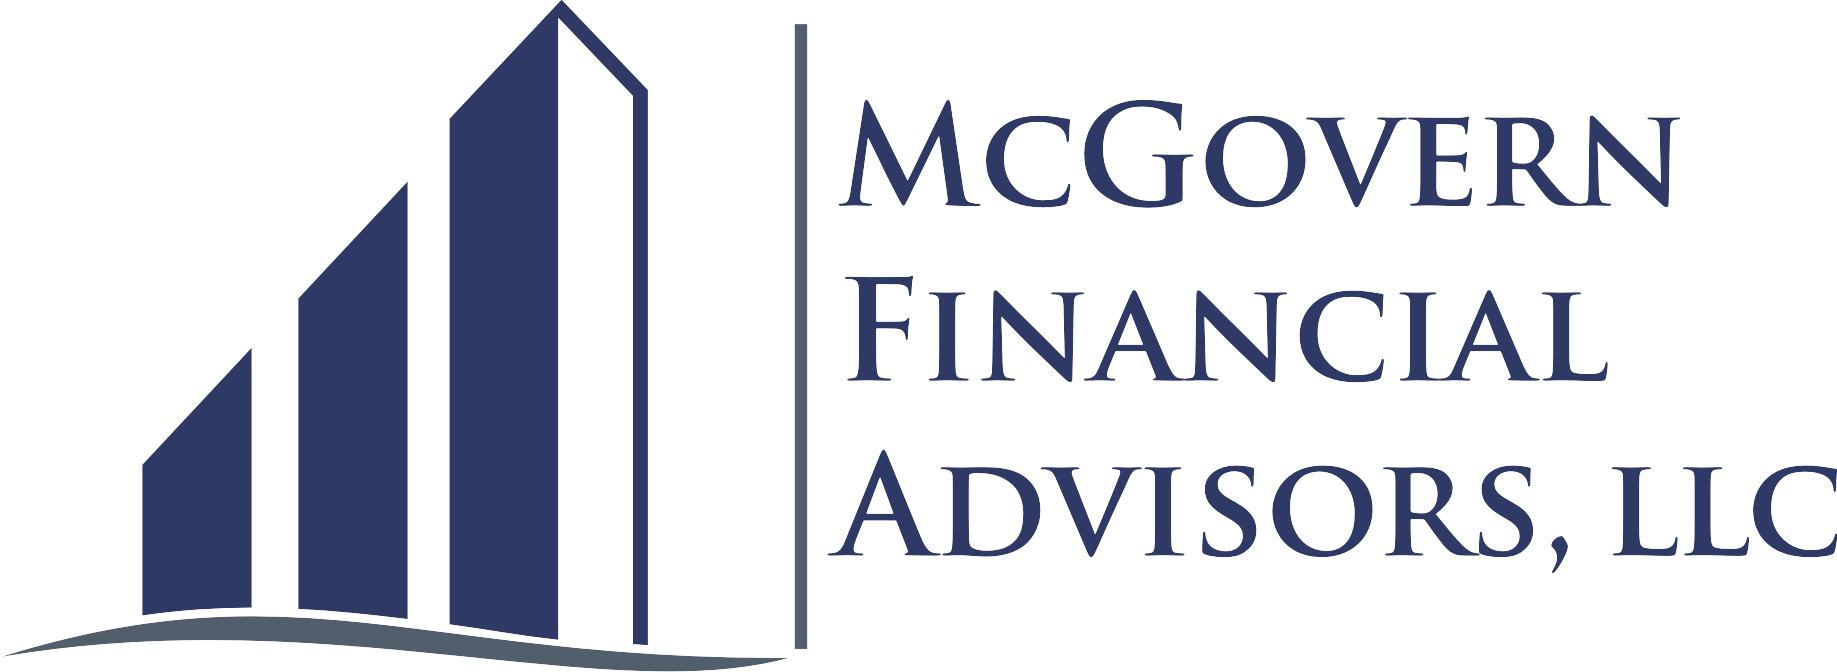 McGovern Financial Advisors, LLC